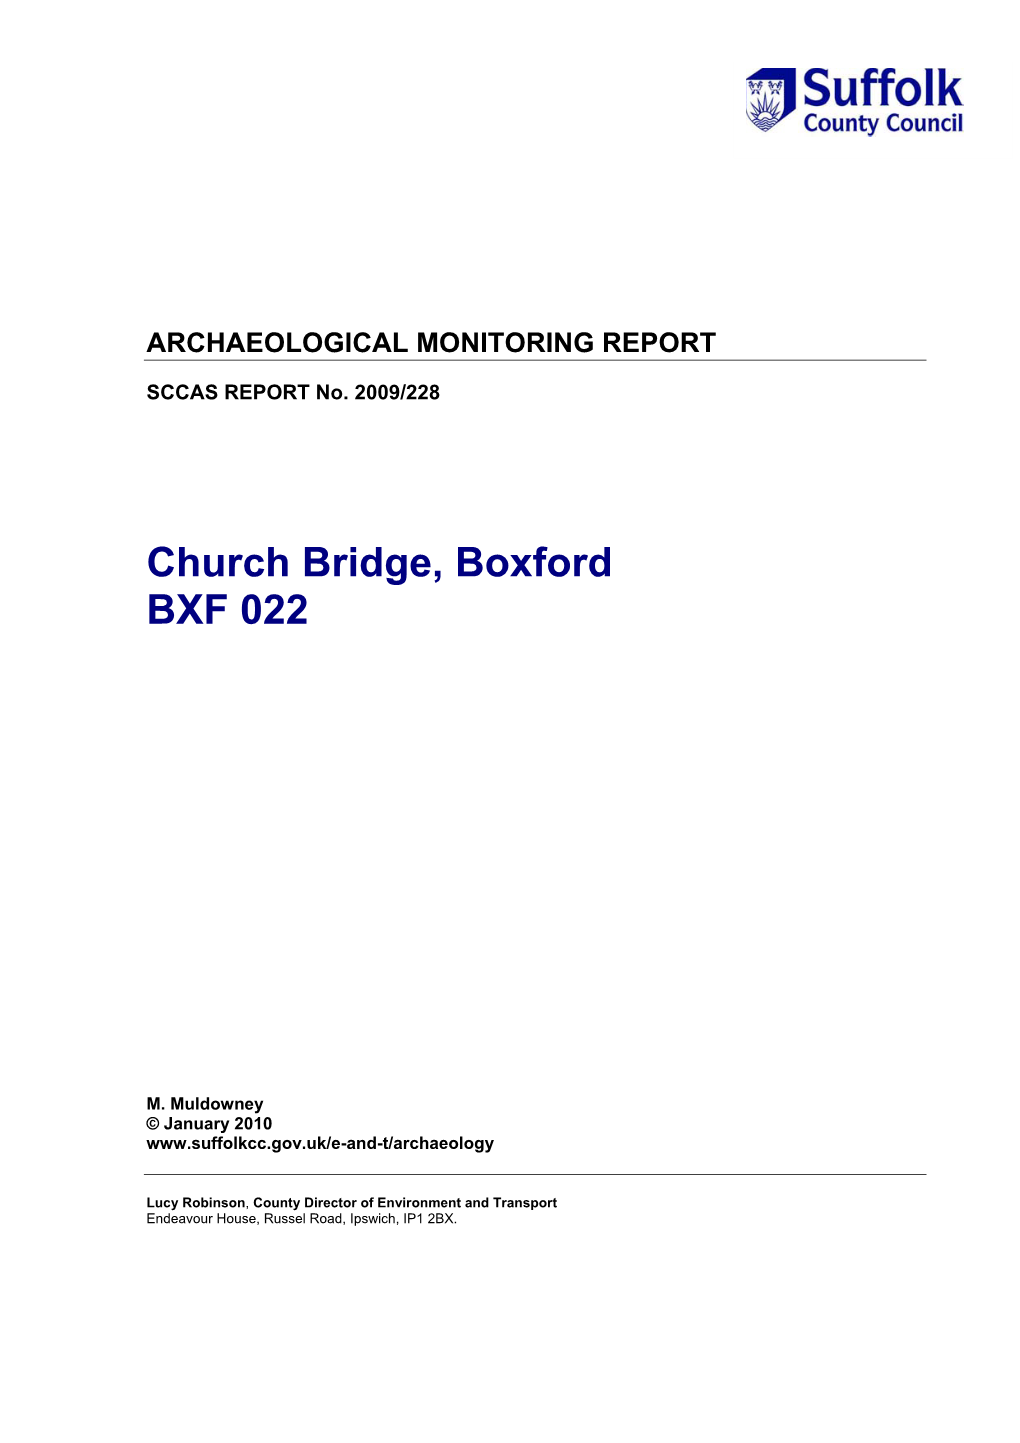 Church Bridge, Boxford BXF 022